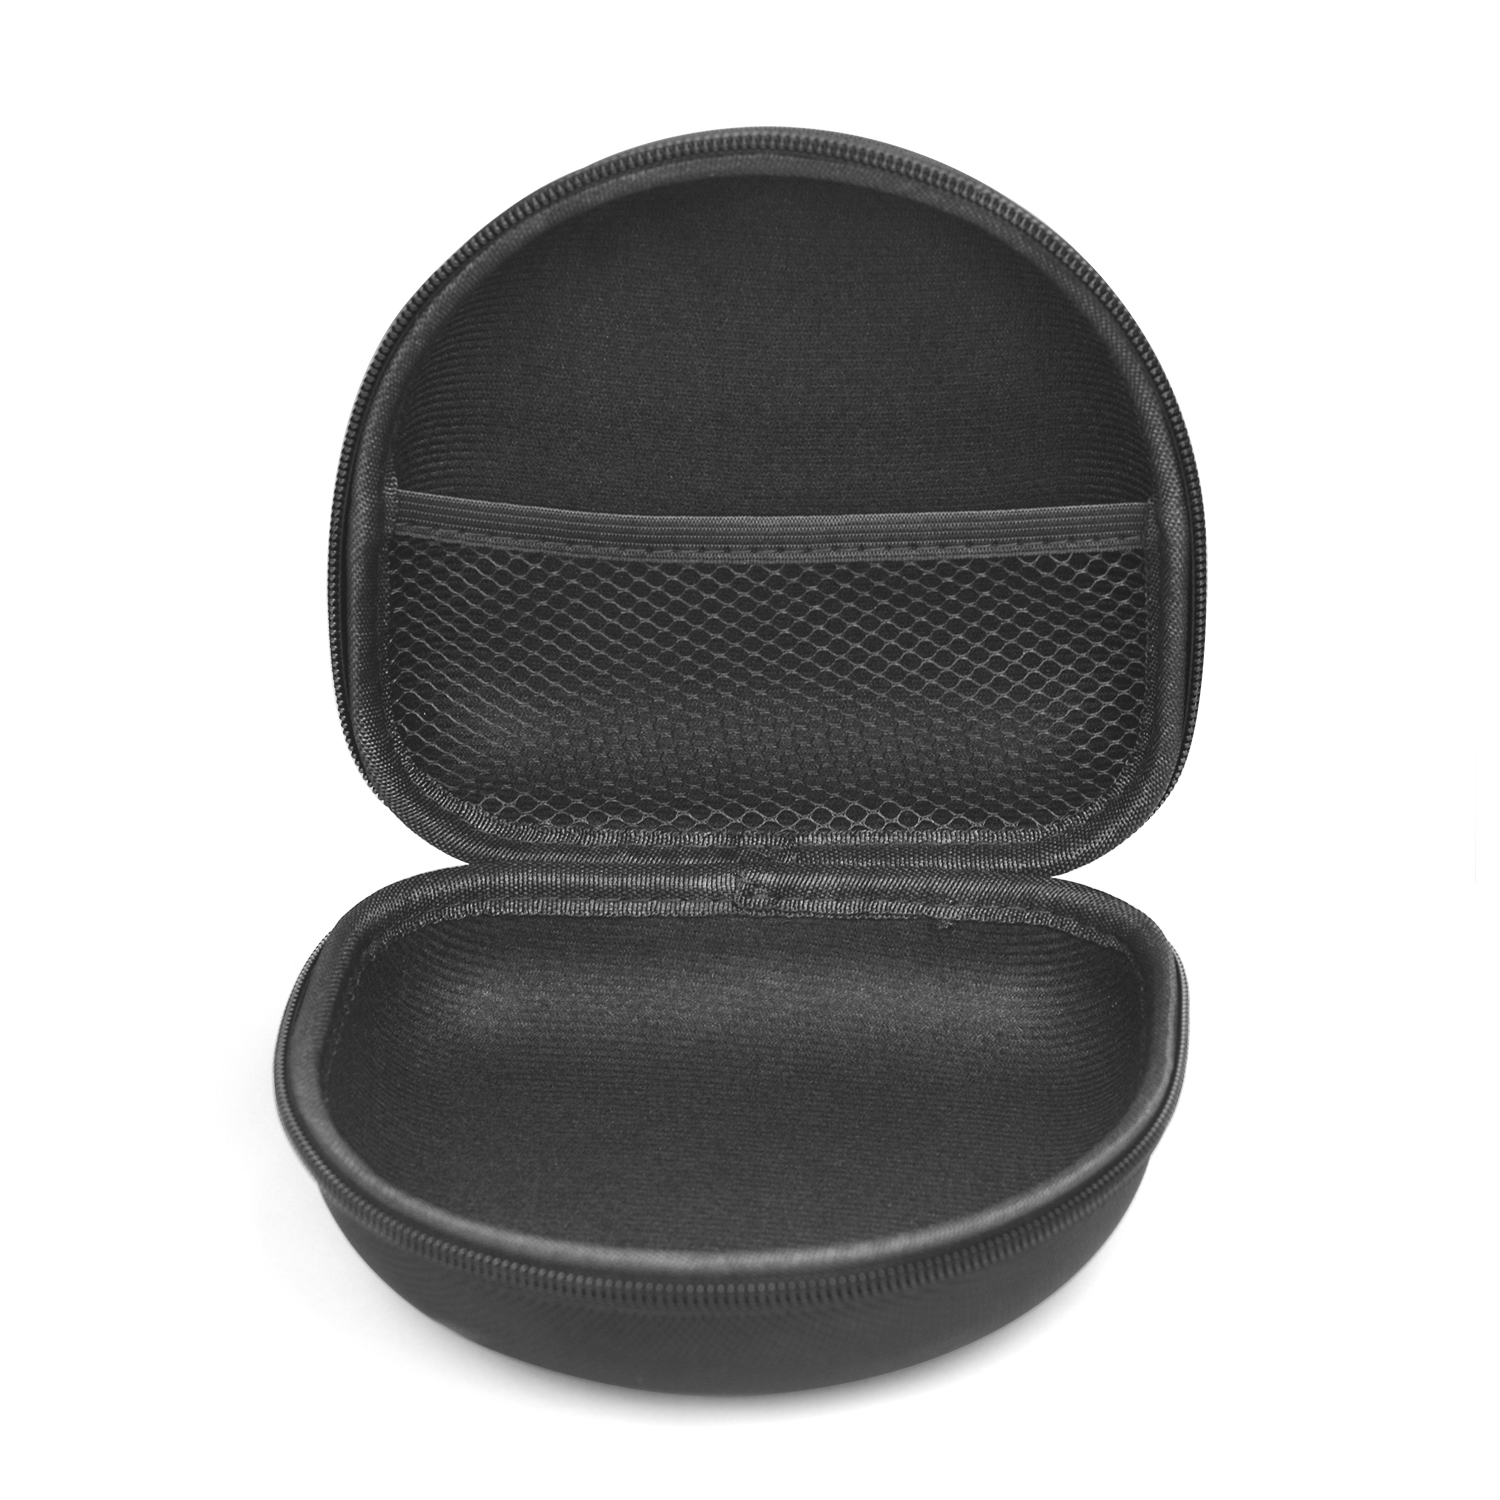 Bakeey-Headphone-Storage-Bag-Dustproof-Portable-Hard-Carrying-Case-Wireless-Head-Mounted-Headset-Pro-1800702-2